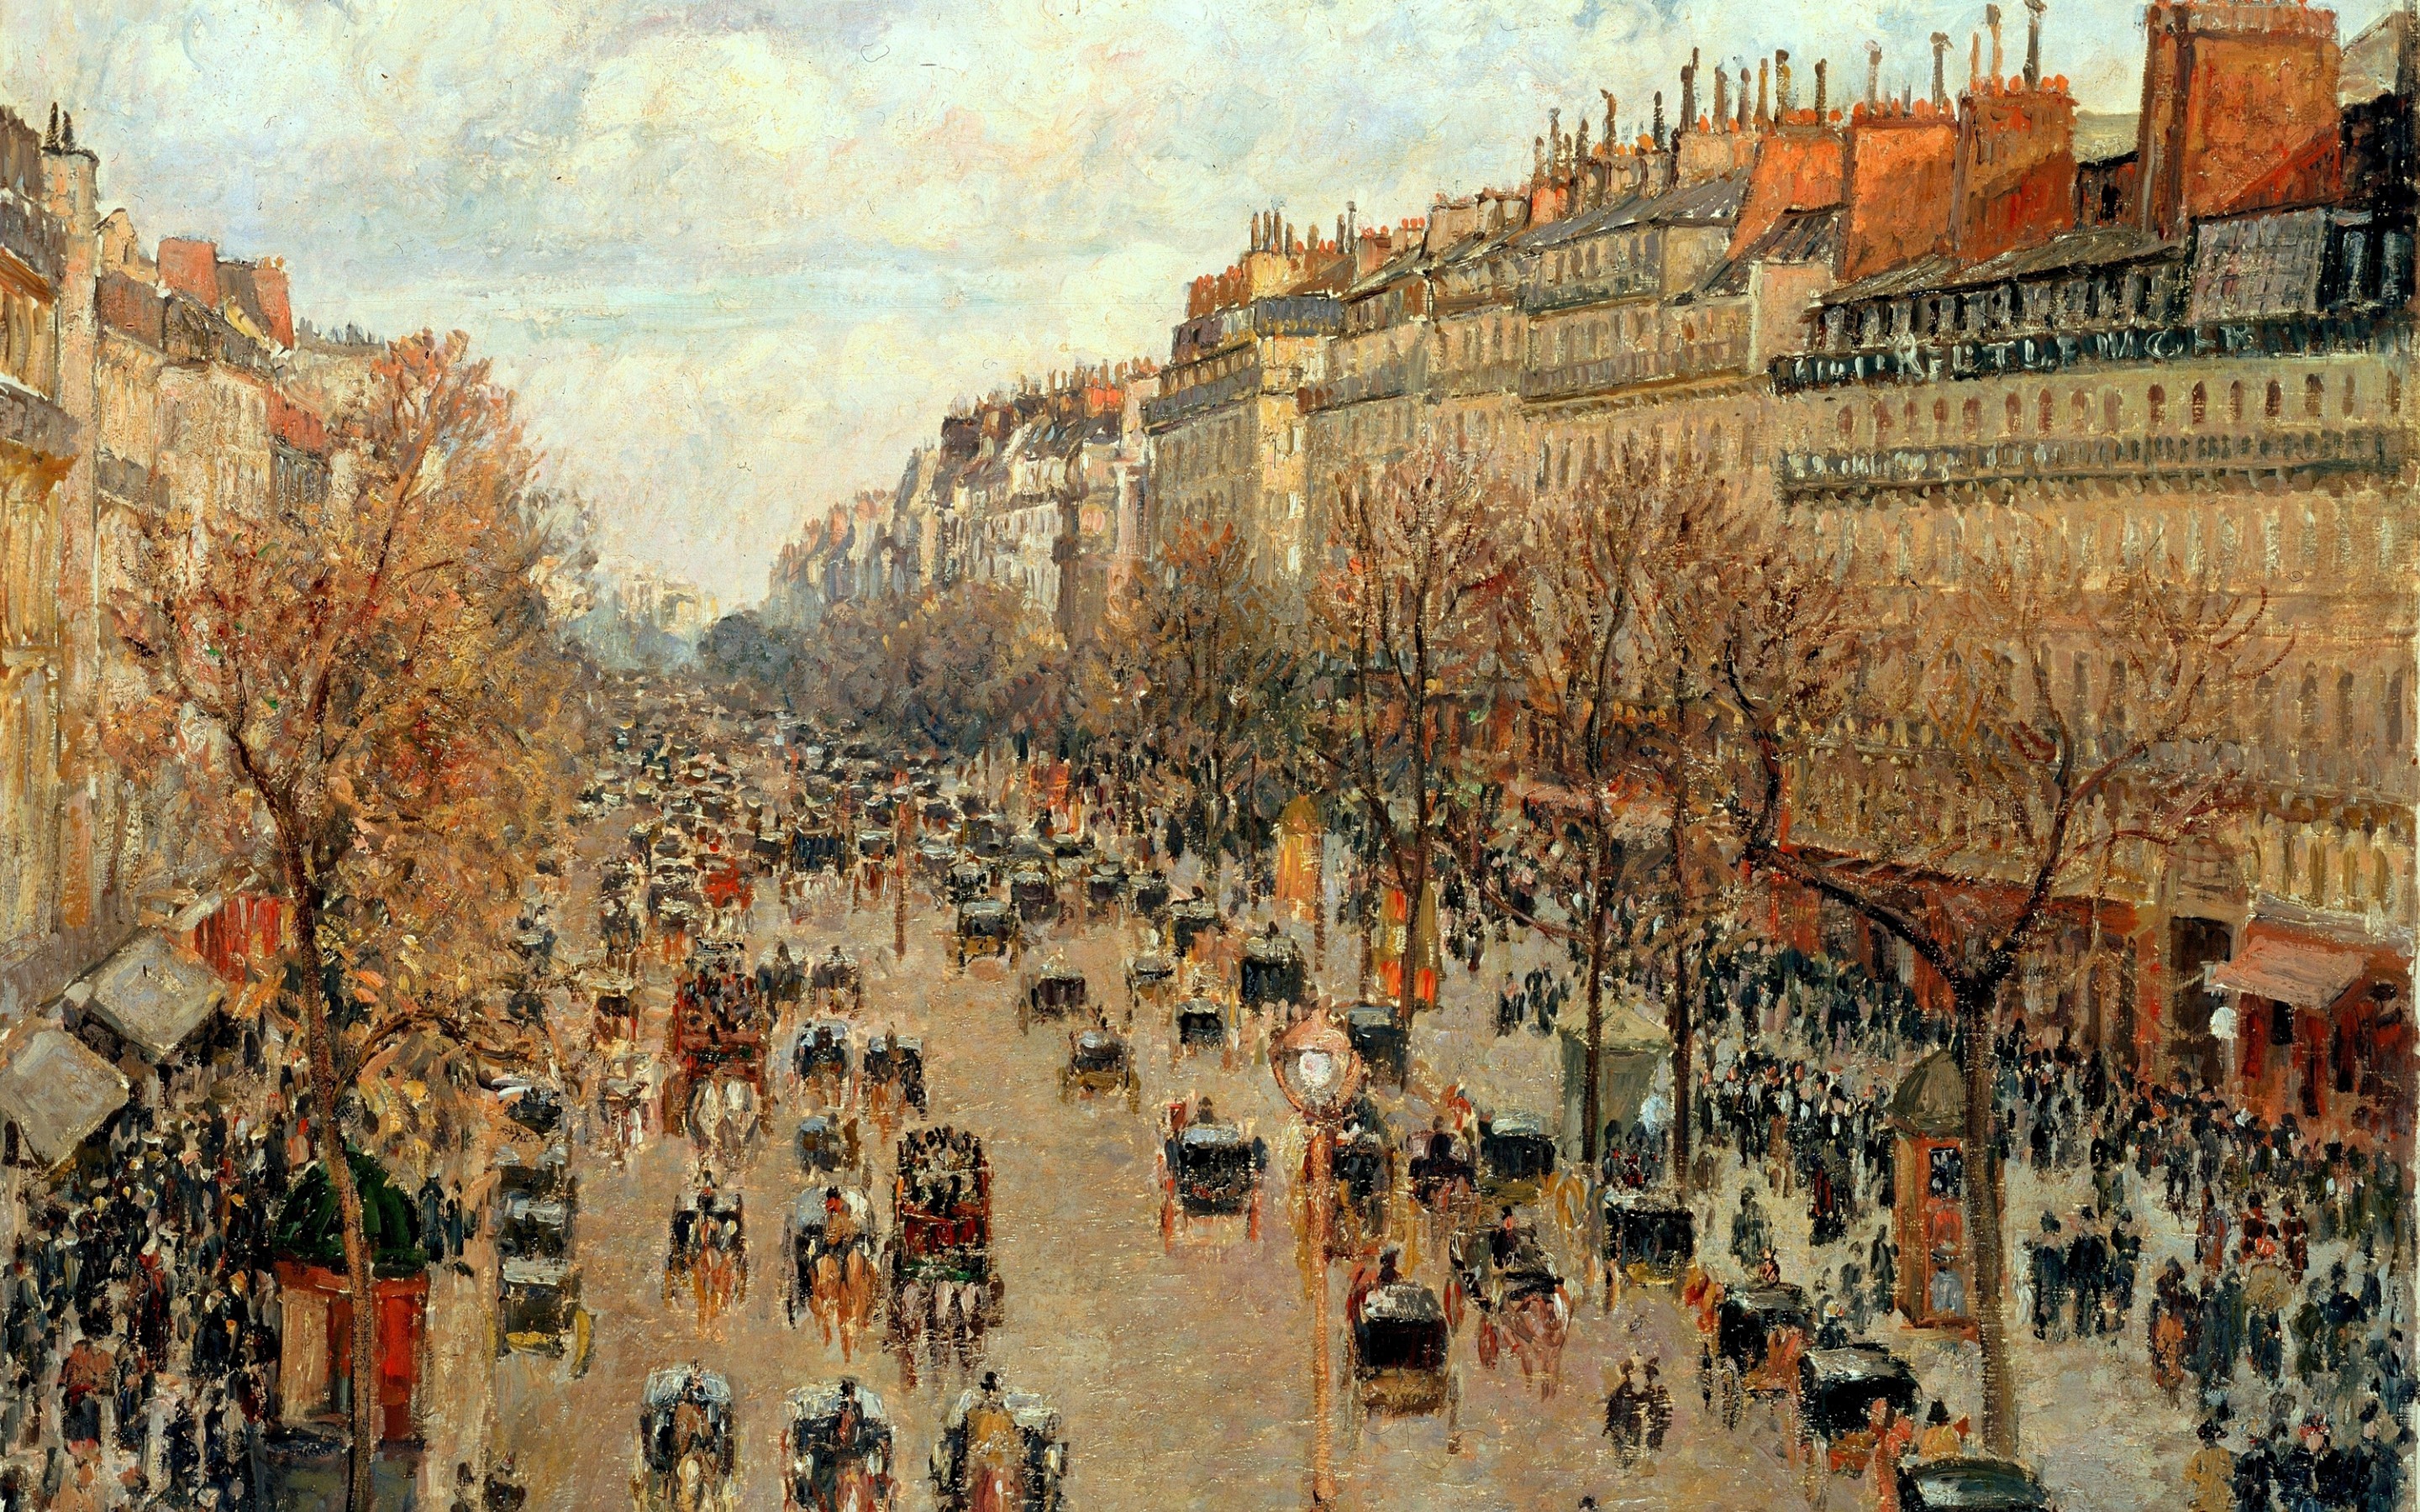 Camille Pissarro, People, Crowds, Artwork, Painting, Architecture, Building, Paris, Montmartre, Street, Trees, Urban, Horse Wallpaper